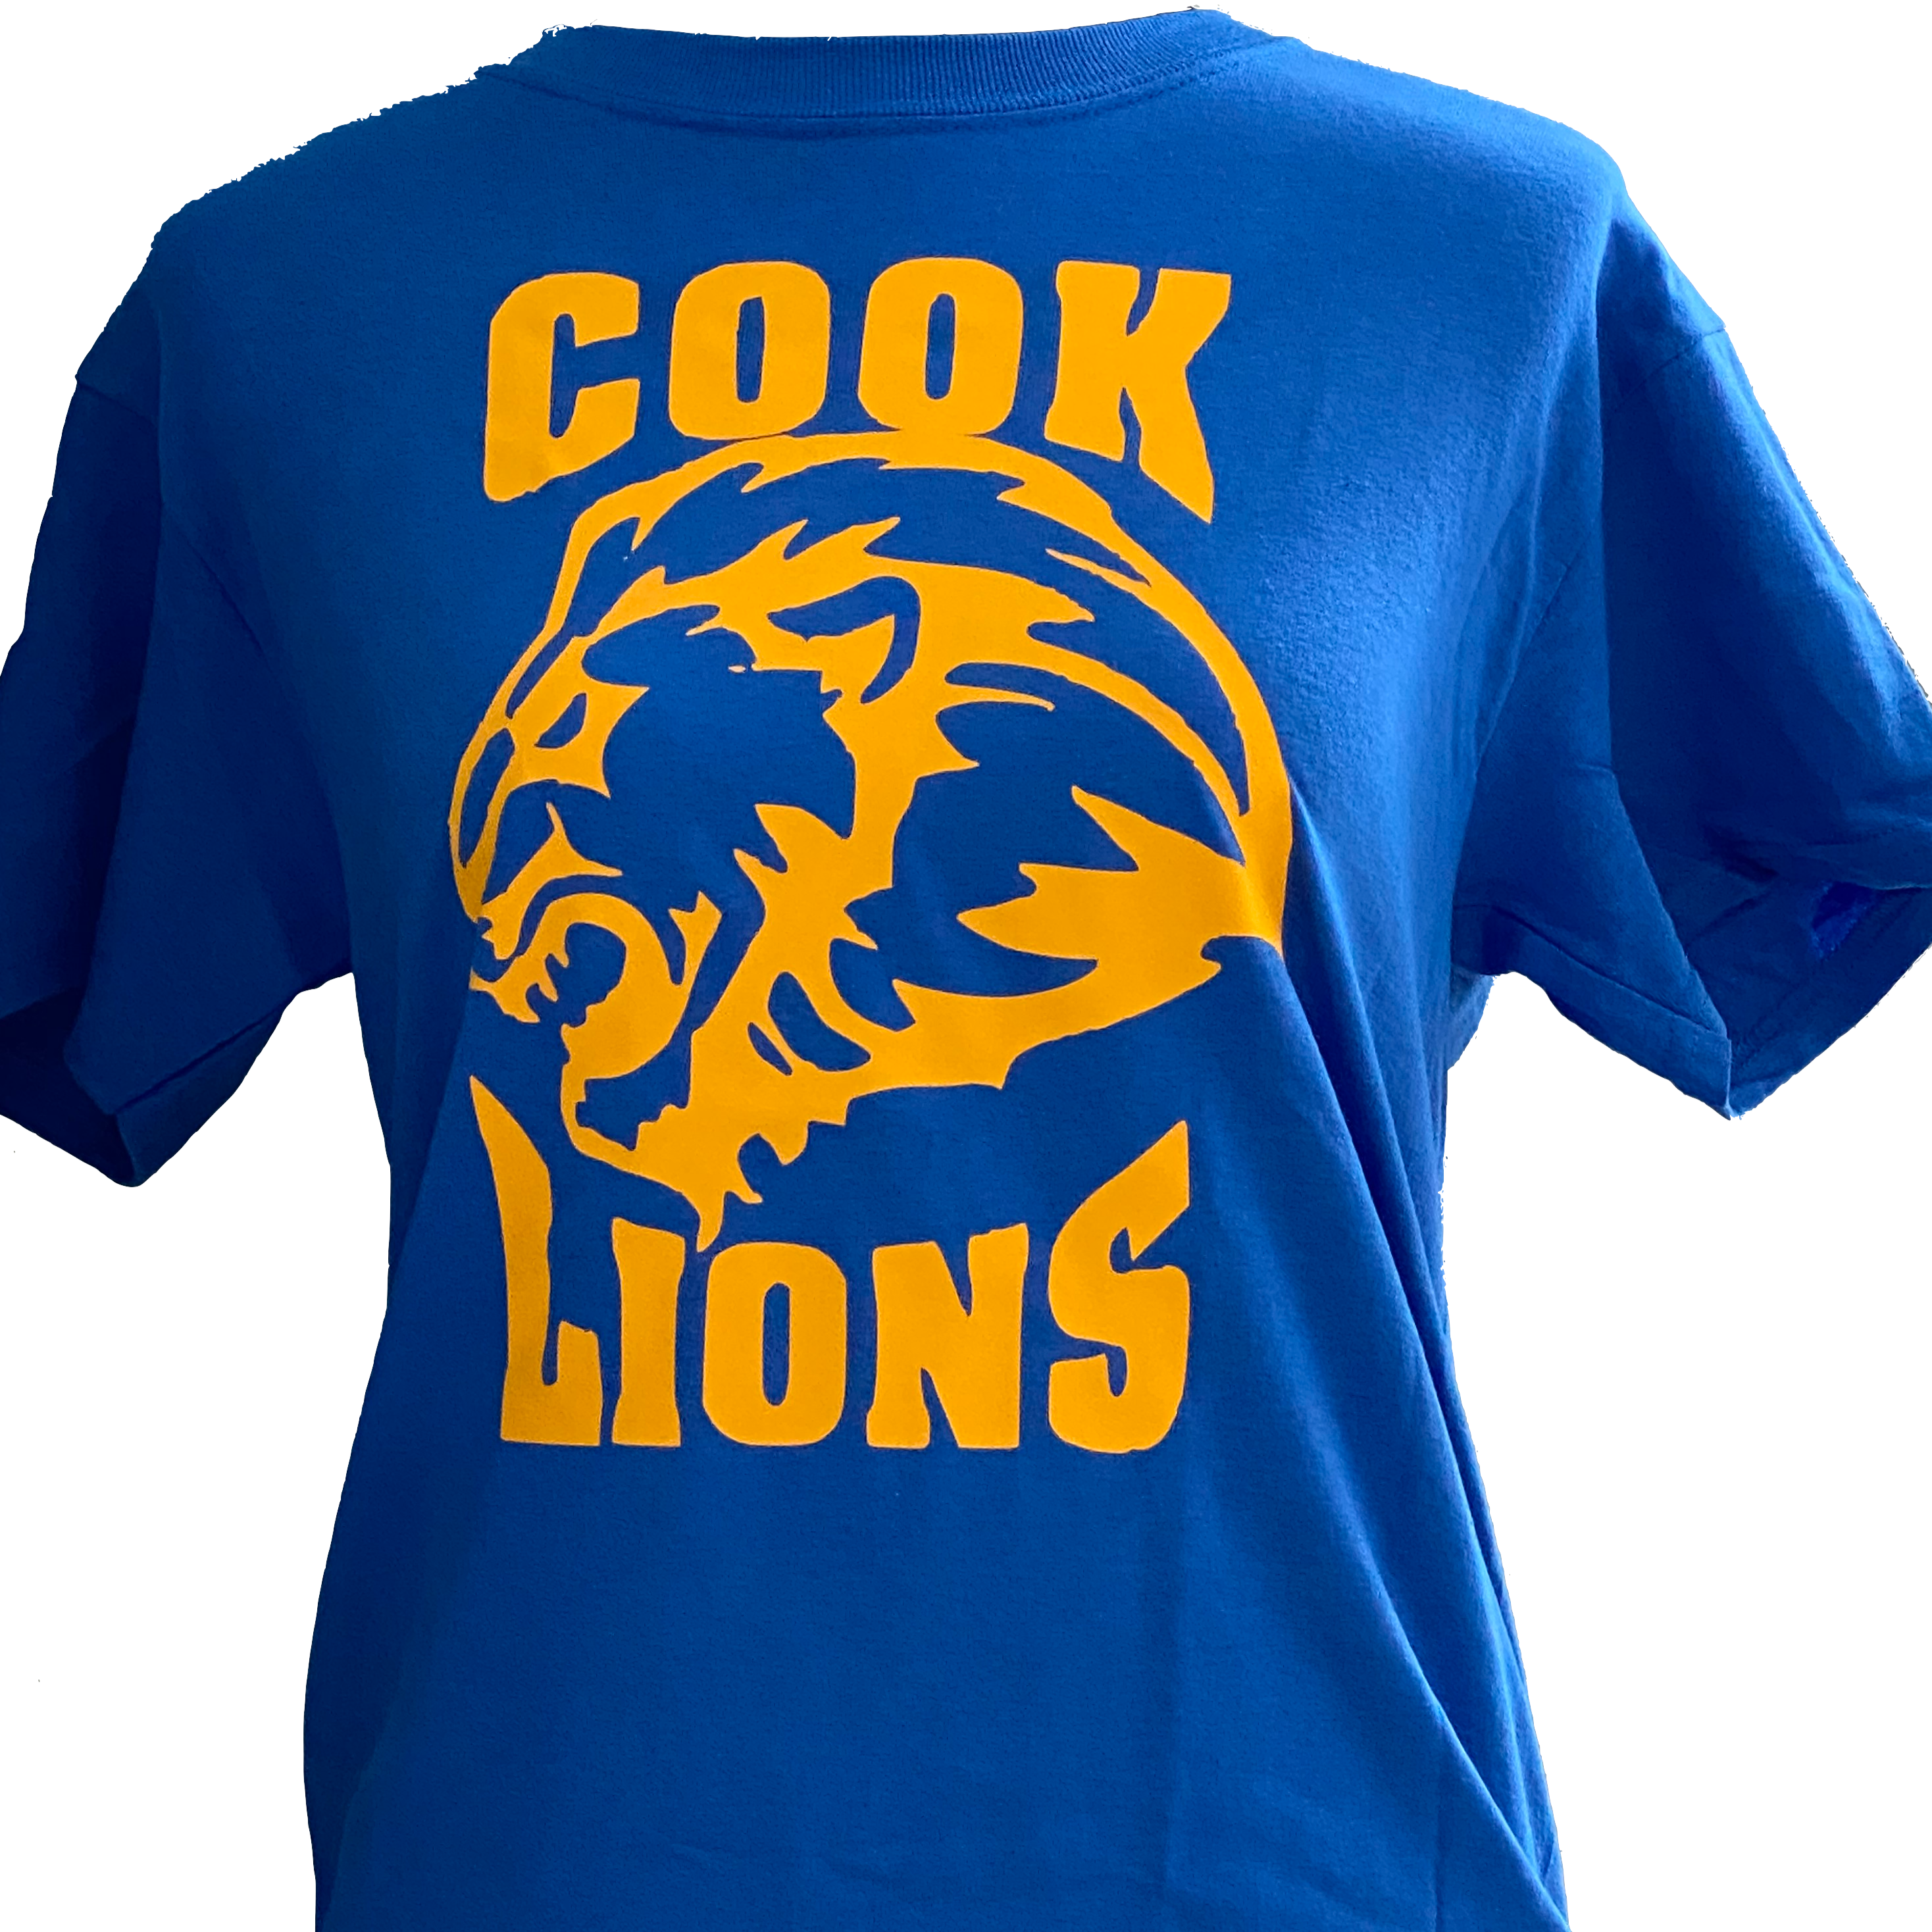 Cook Lions Royal Blue Adult T-Shirt